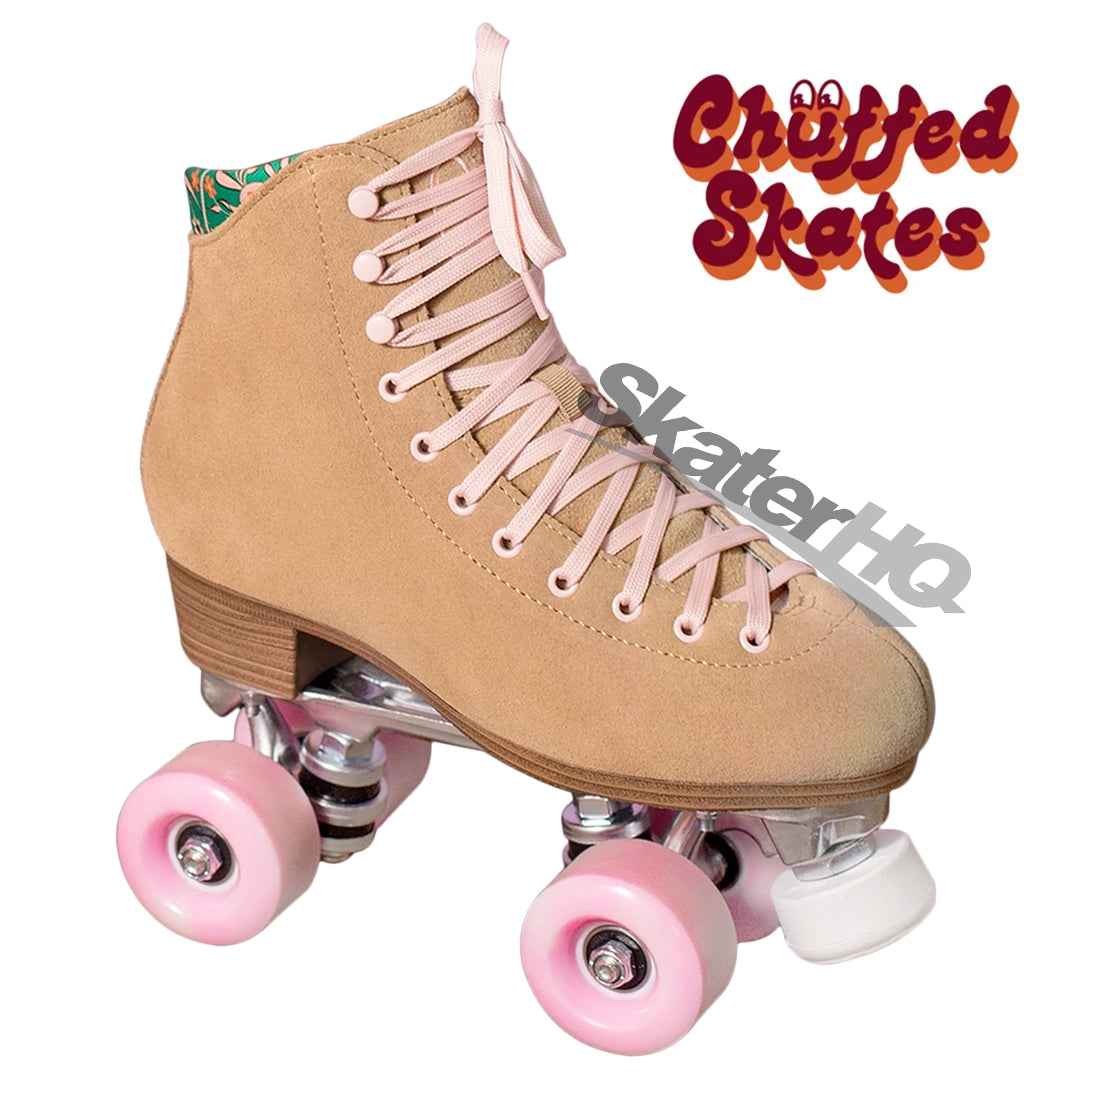 Chuffed Crew Iced Coffee 9US Roller Skates